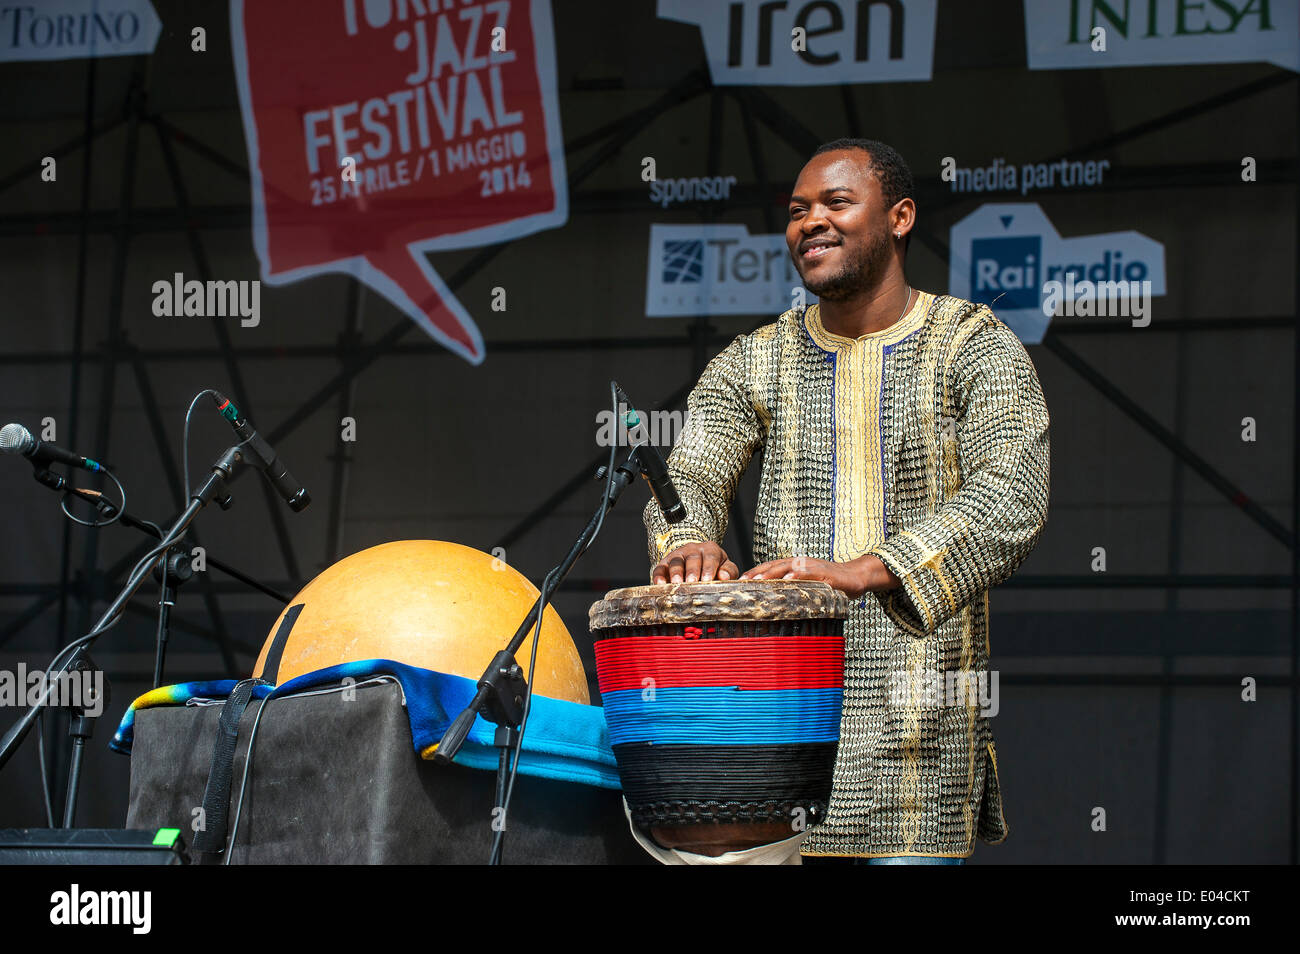 Turin, Italy. 01st May, 2014. Piazza Castello " Torino Jazz Festival " - Taranta nera -Salento met Africa - Kalifa Kone Credit:  Realy Easy Star/Alamy Live News Stock Photo